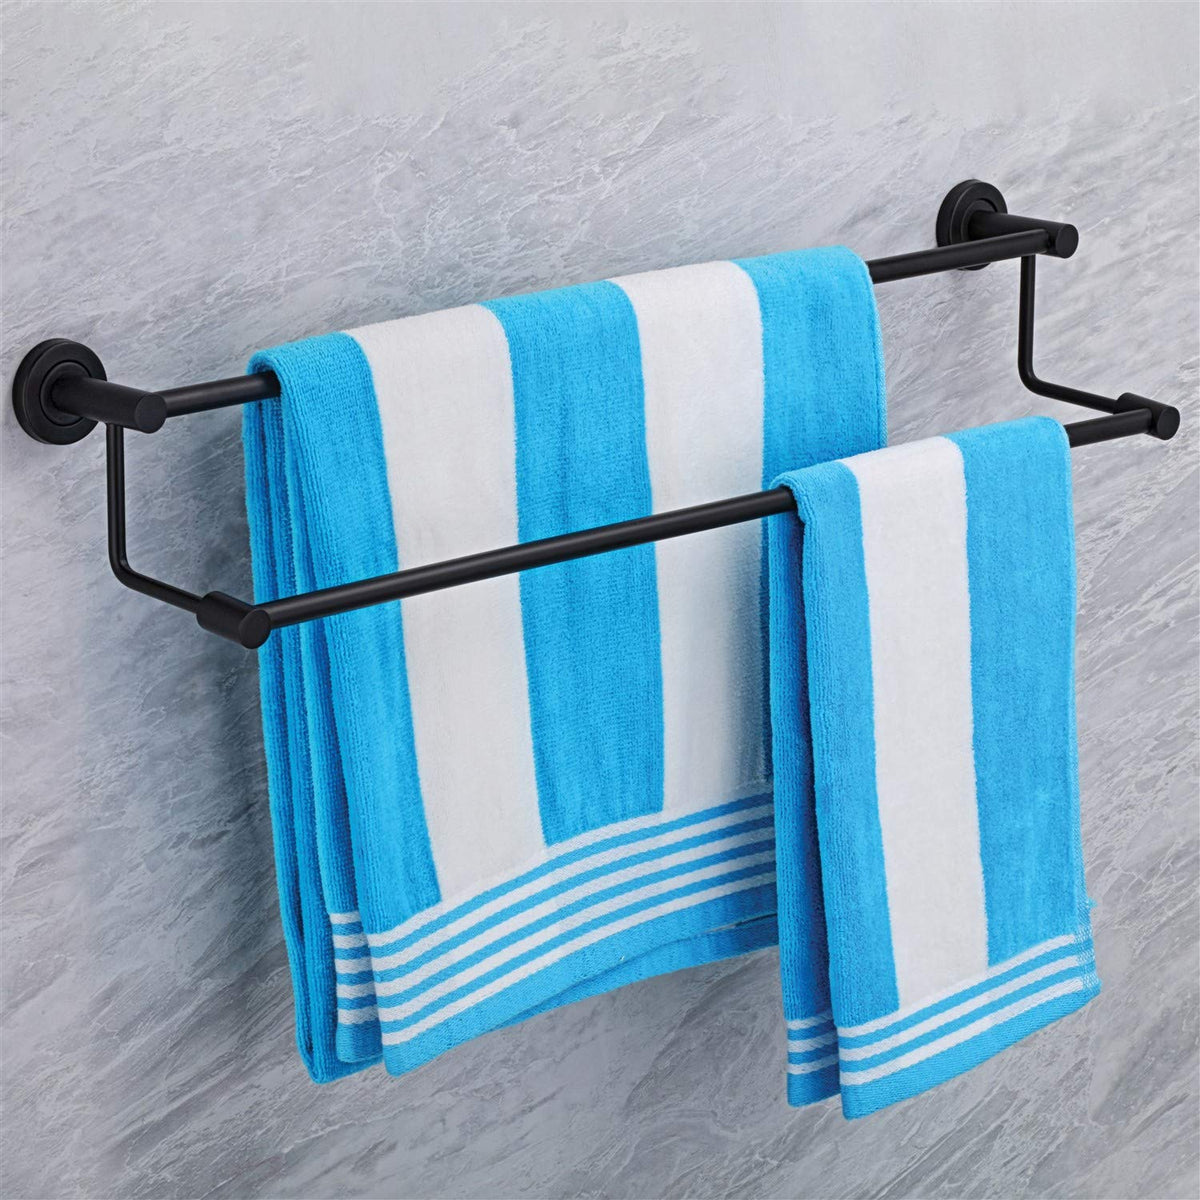 Plantex Stainless Steel Towel Rod/Towel Rack for Bathroom/Towel Bar/Hanger/Stand/Bathroom Accessories (24 Inch - Black)